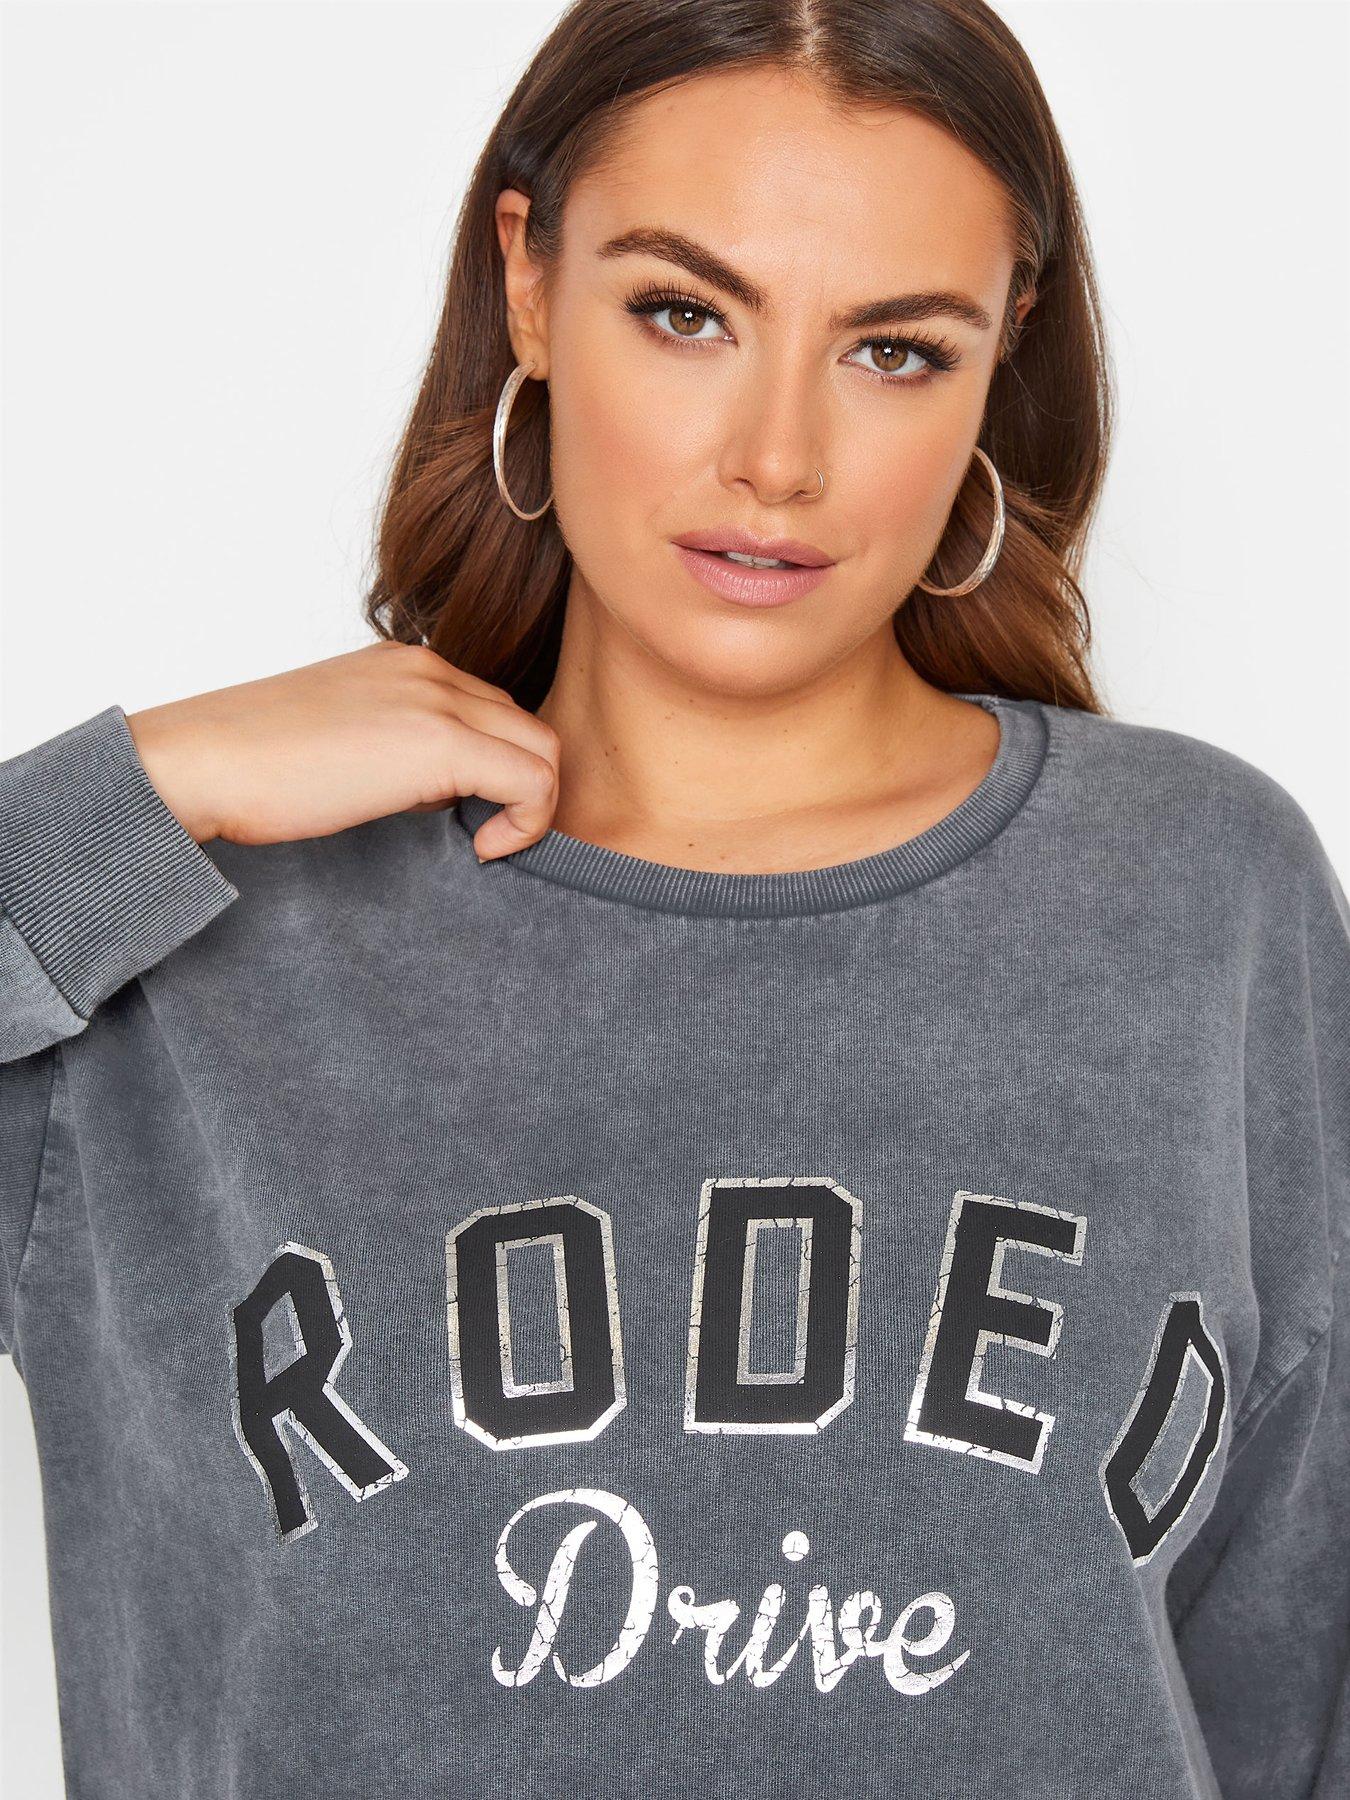 Women Yours Acid Wash 'Rodeo Drive' Sweatshirt - Grey